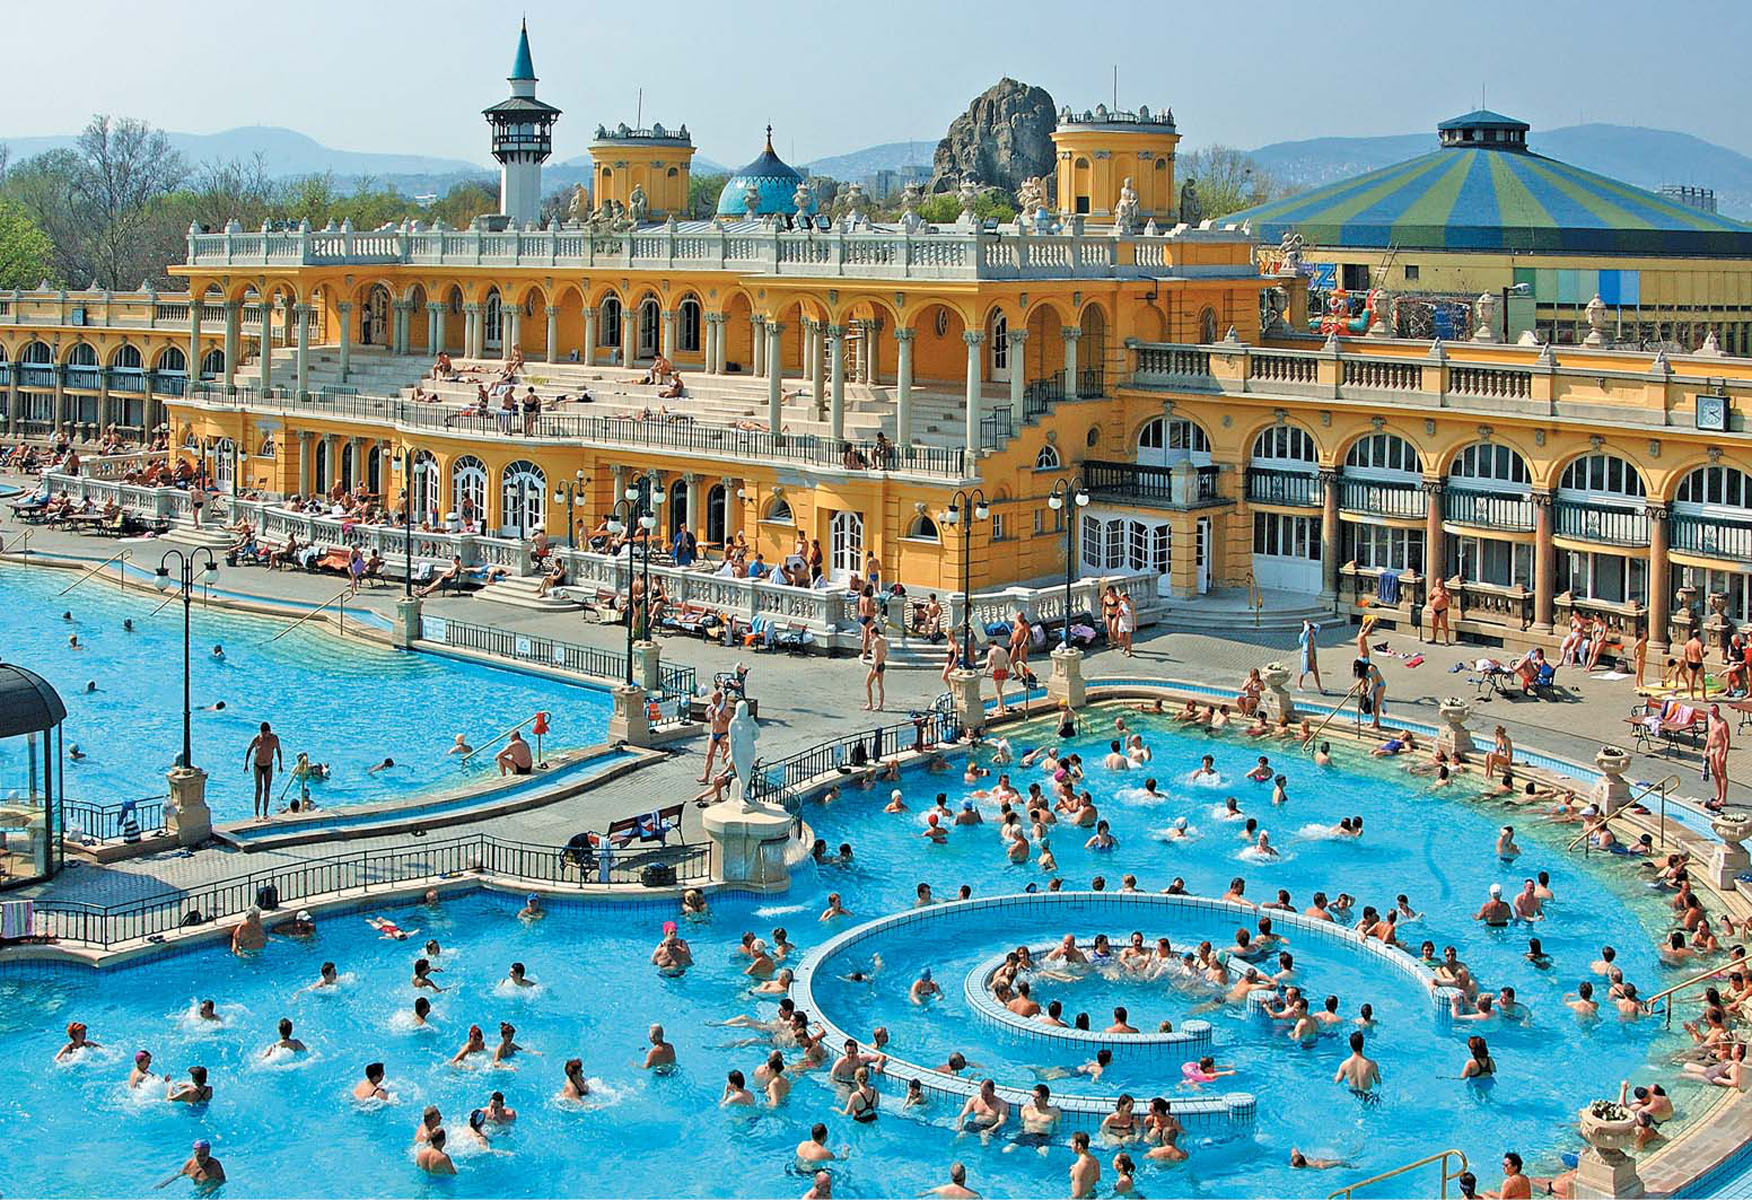 Budapest Spas Made Healthy Ft 2.4 Billion Revenue This Summer